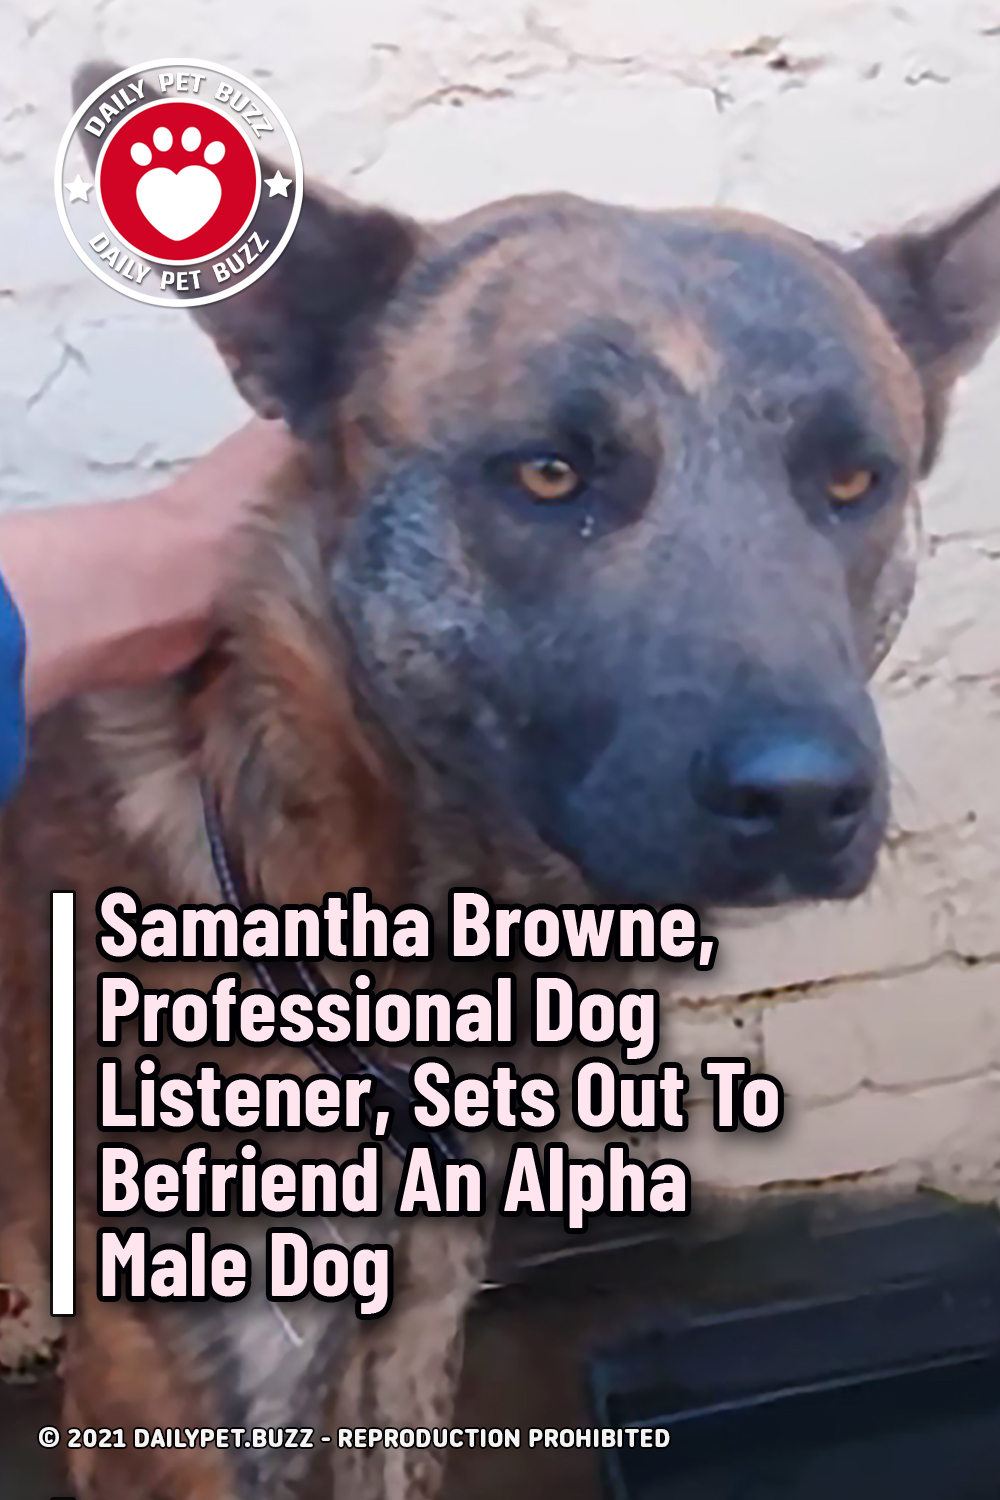 Samantha Browne, Professional Dog Listener, Sets Out To Befriend An Alpha Male Dog